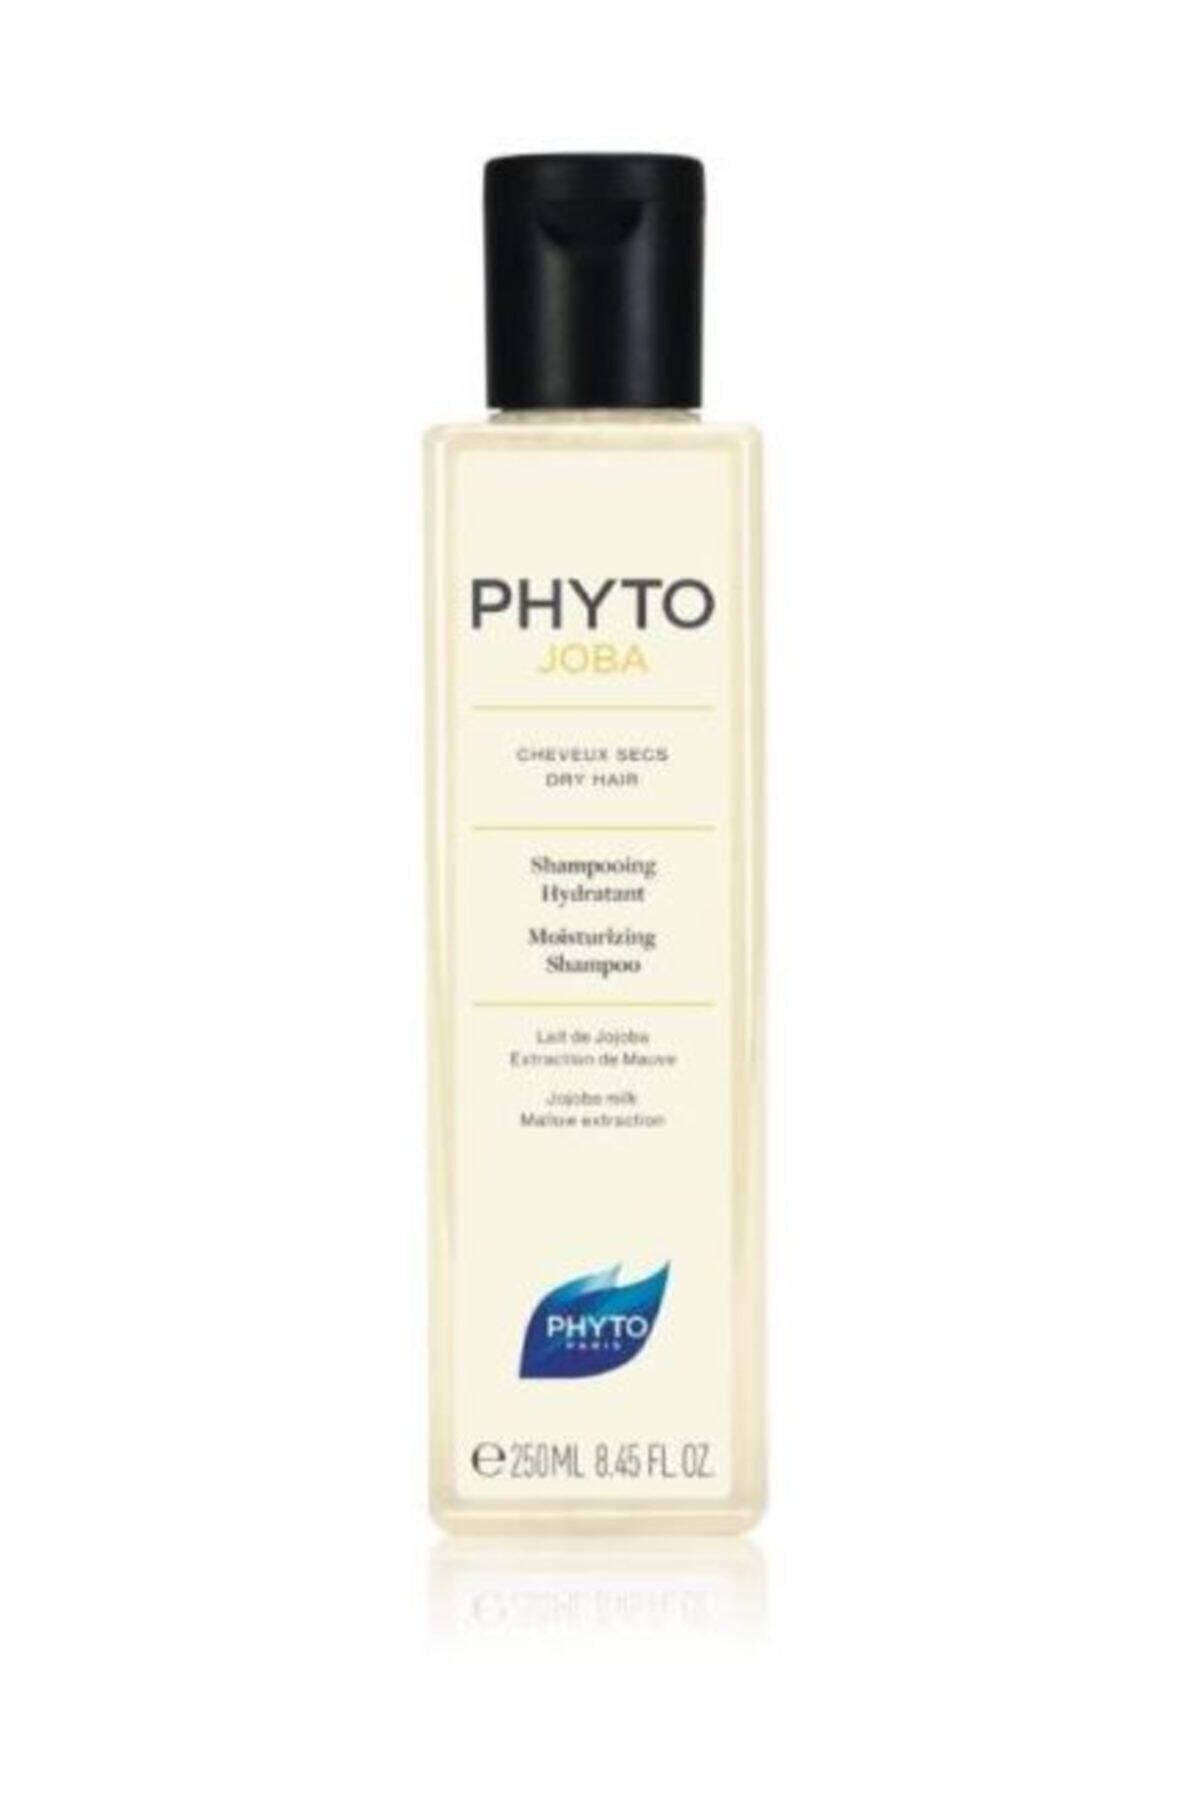 Phyto شامپو Phytojoba مرطوب کننده قوی برای موهای خشک 250 میل